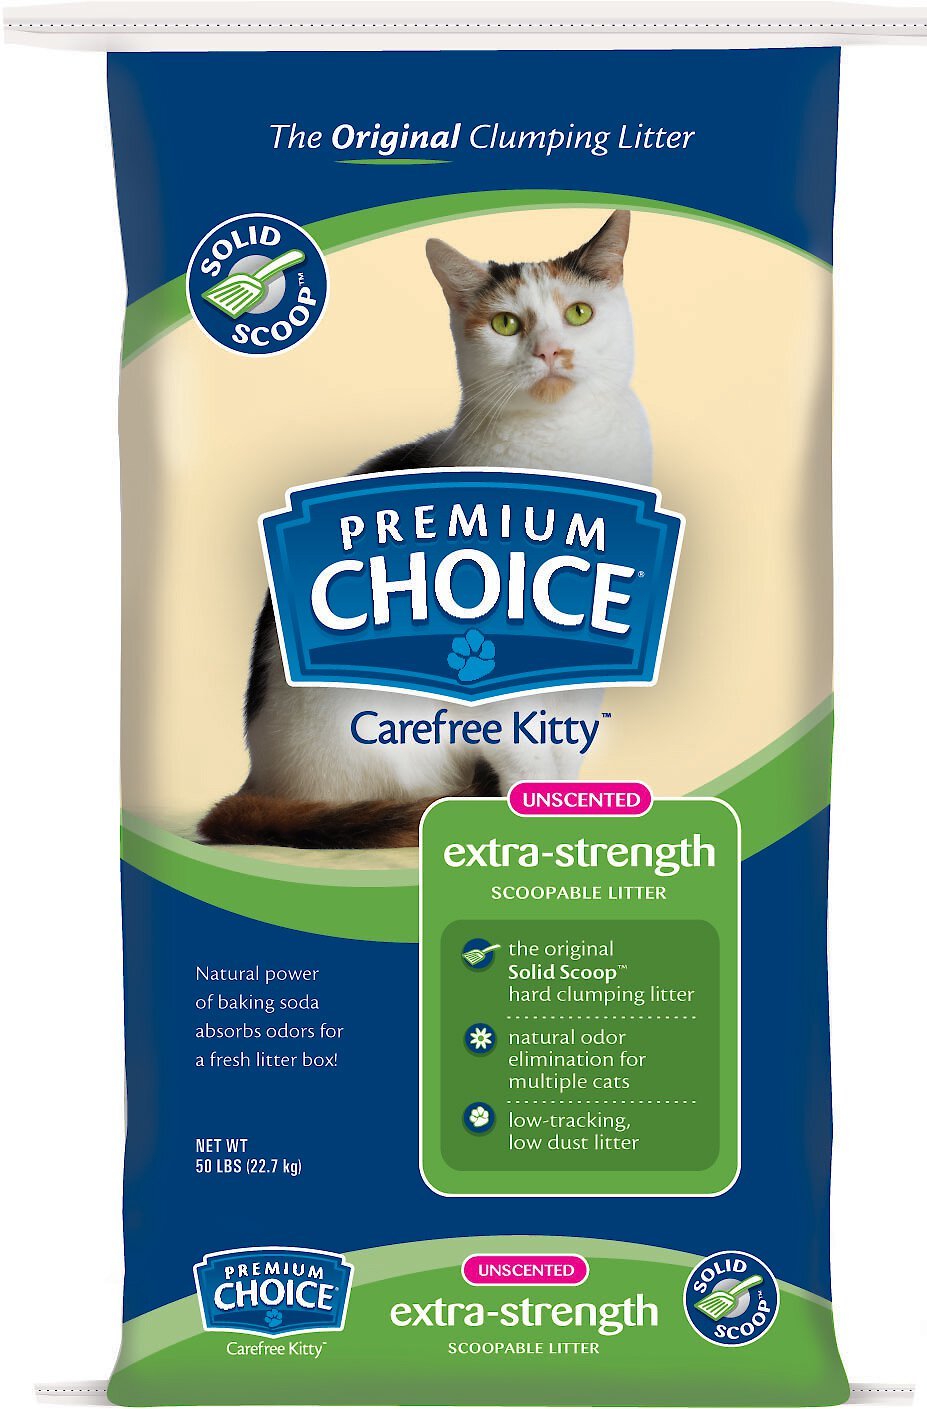 Premium Choice Cat Litter Retailers